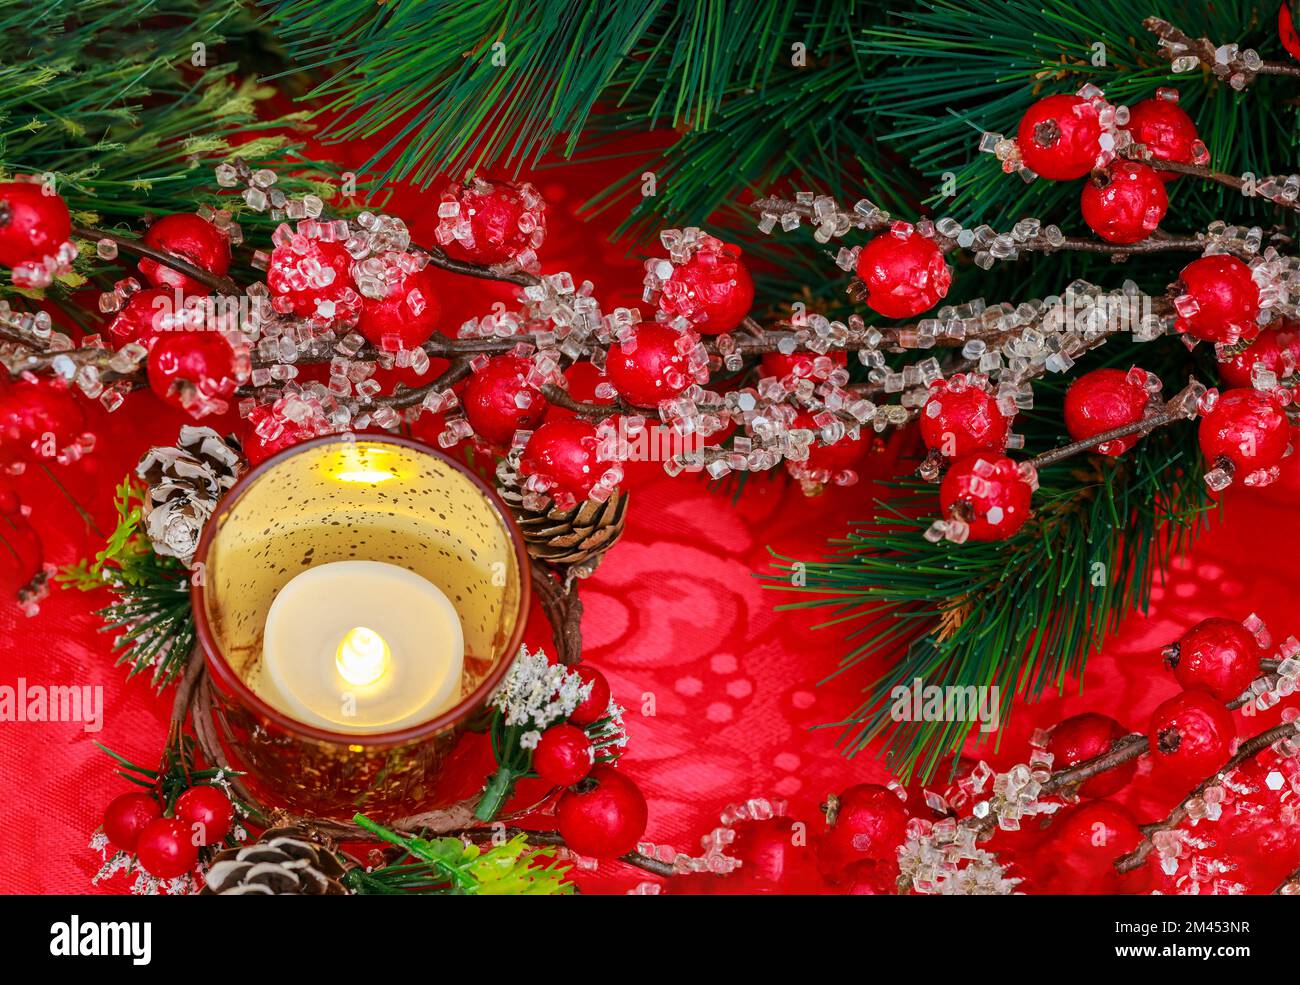 Un'atmosfera di festivita' e' creata a Natale da bacche rosse e candele bruciate. Foto Stock